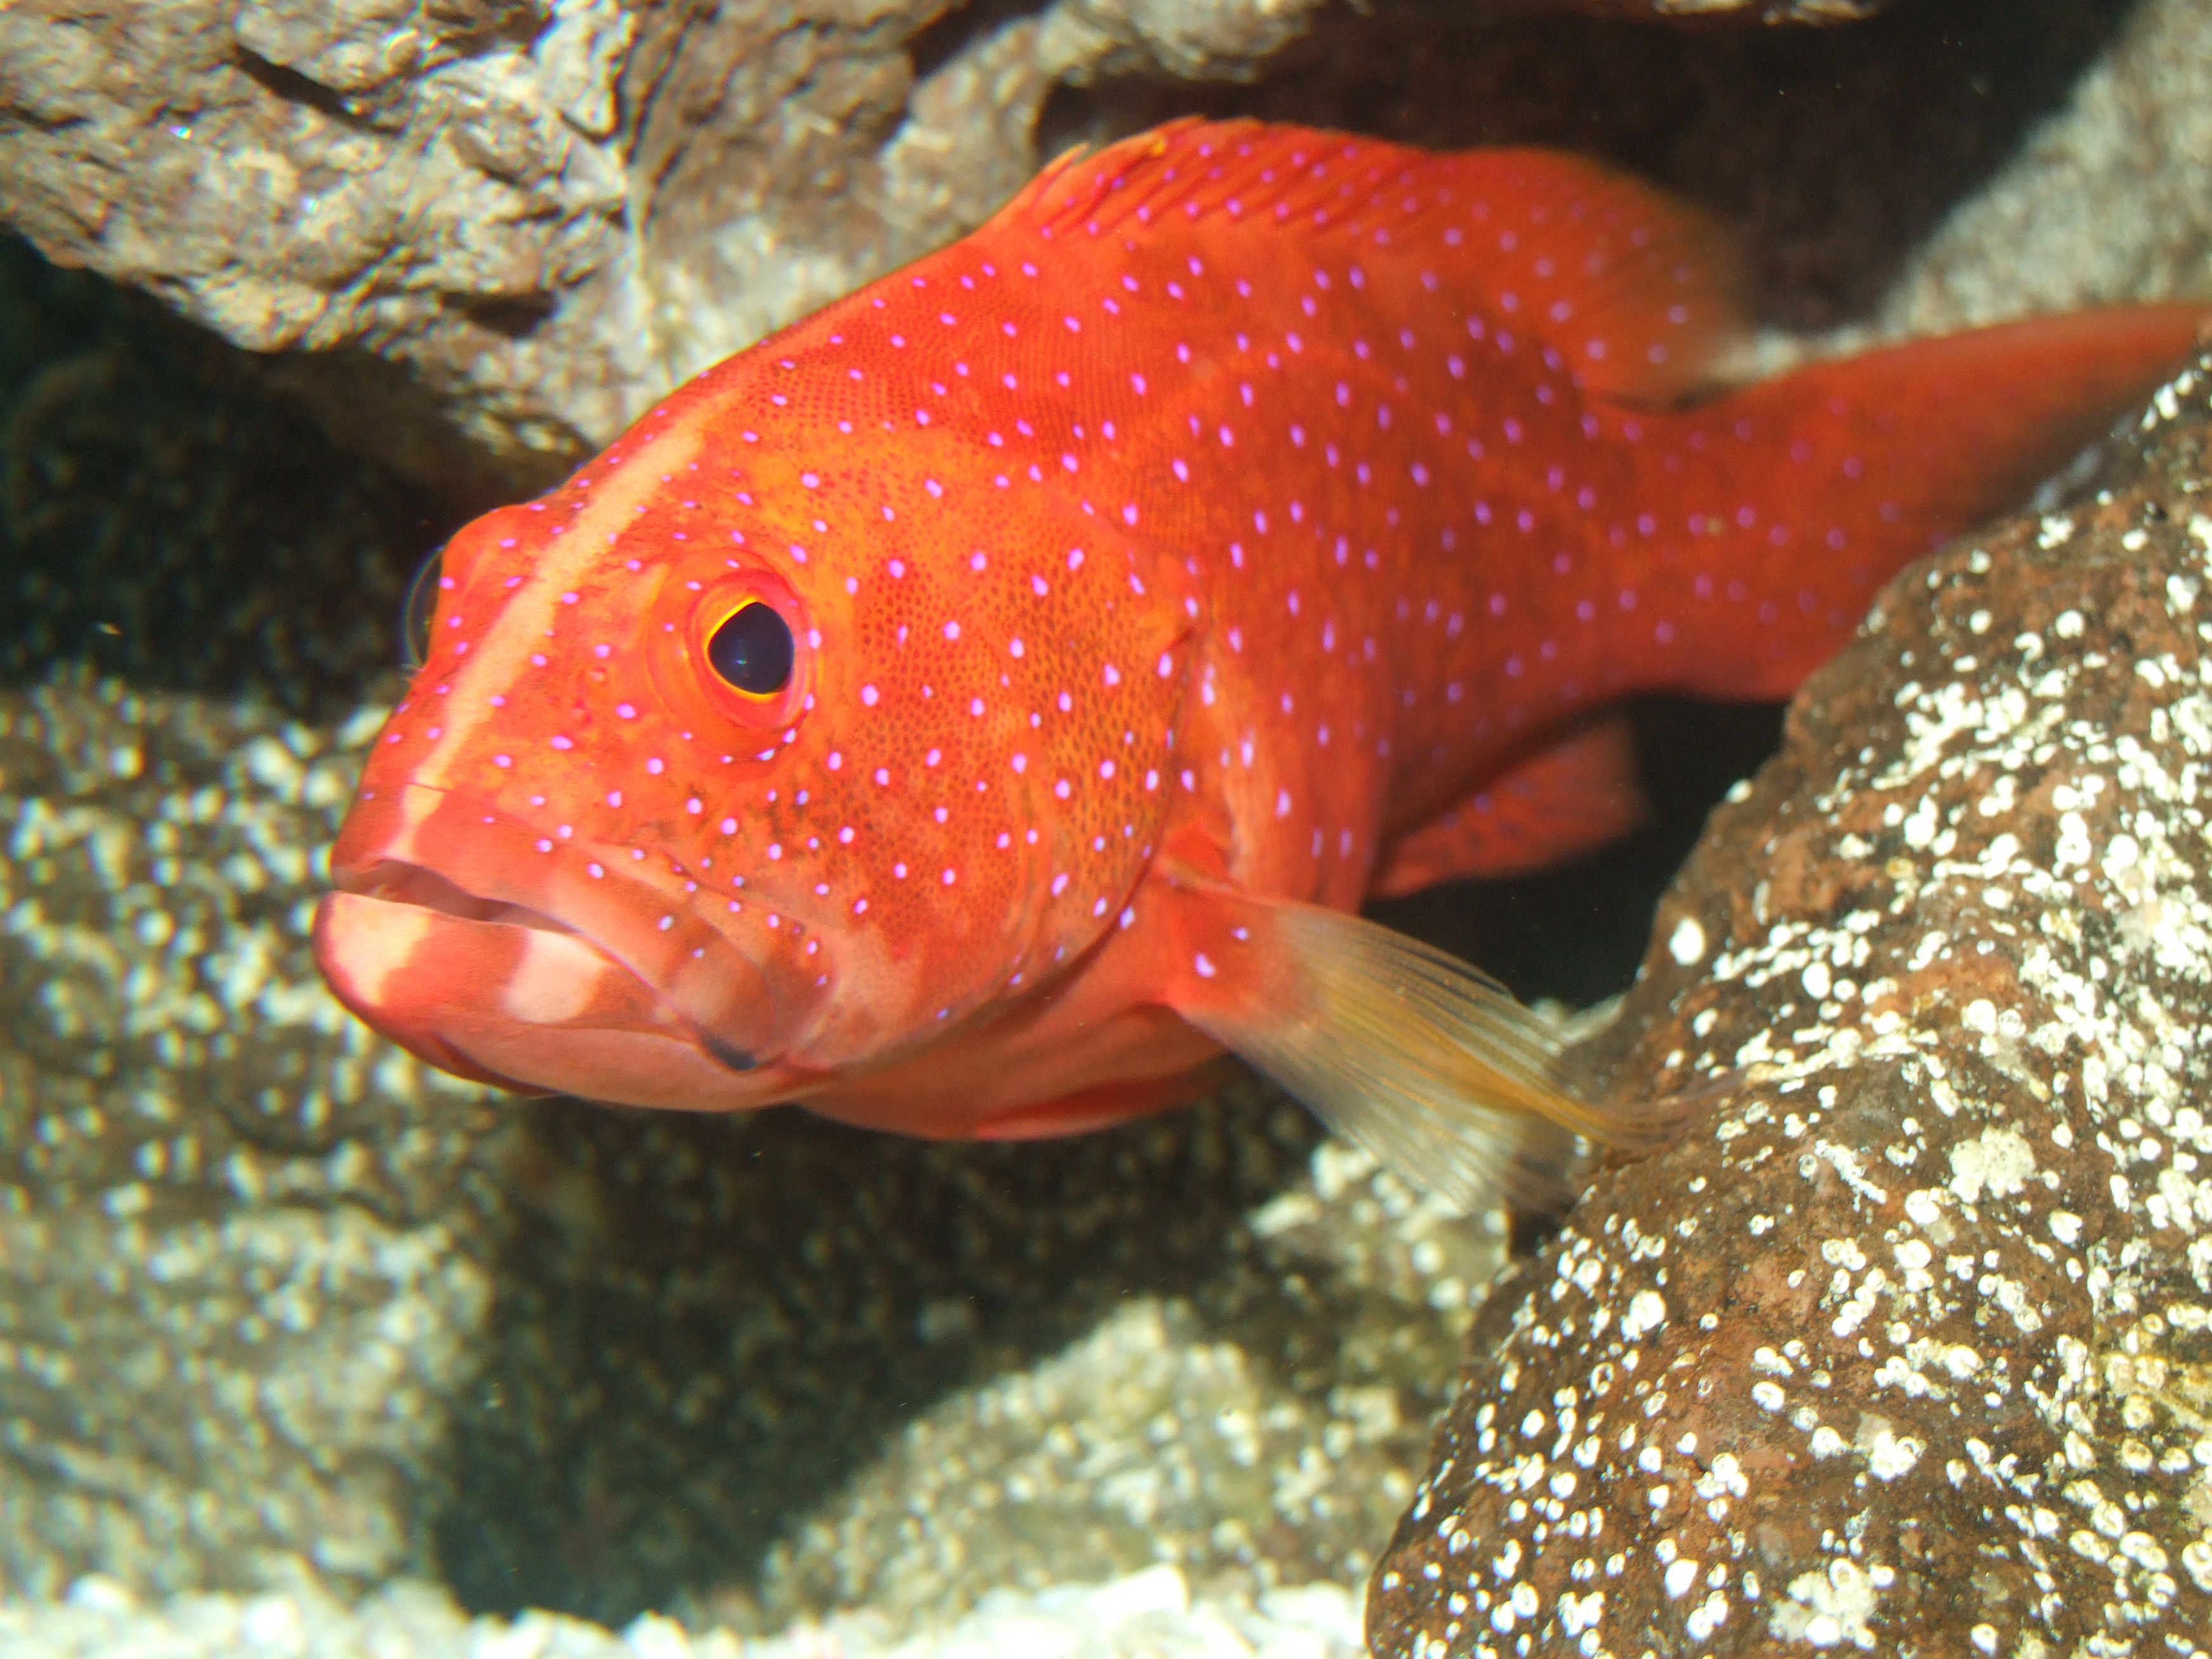 ocean-underwater-red-biology-fish-fauna-coral-reef-aquarium-marine-sea-life-goldfish-grouper-orange-red-marine-biology-pomacentridae-red-fish-marine-diversity-miniatus-grouper-995271.jpg